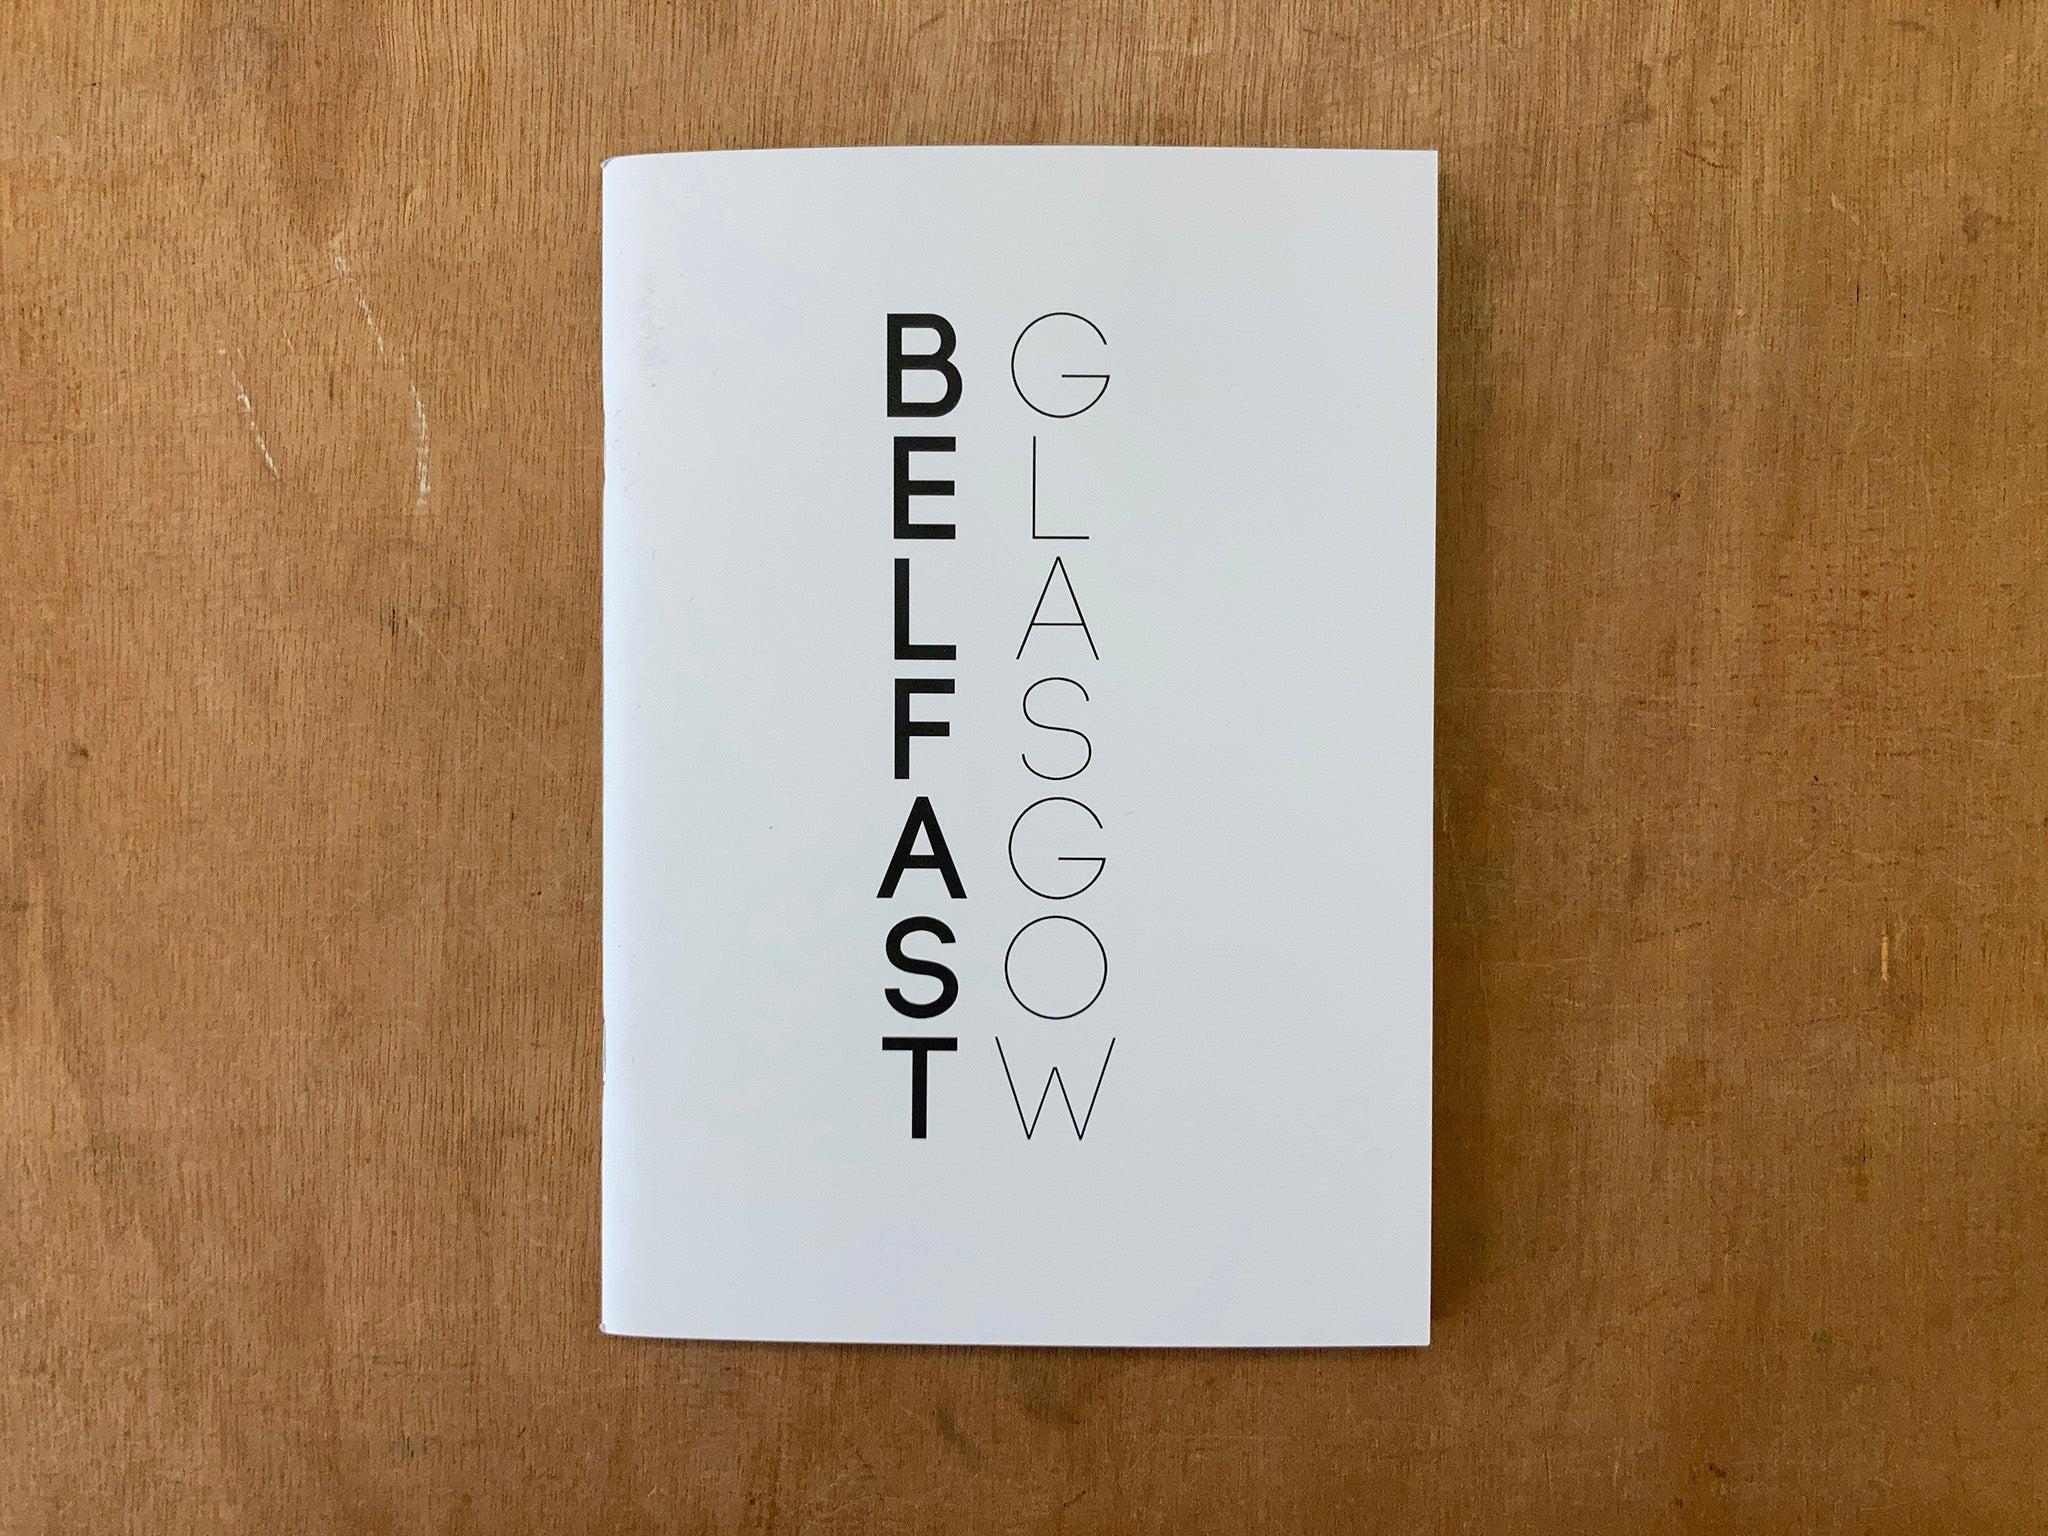 BELFAST/GLASGOW by Alasdair Watson